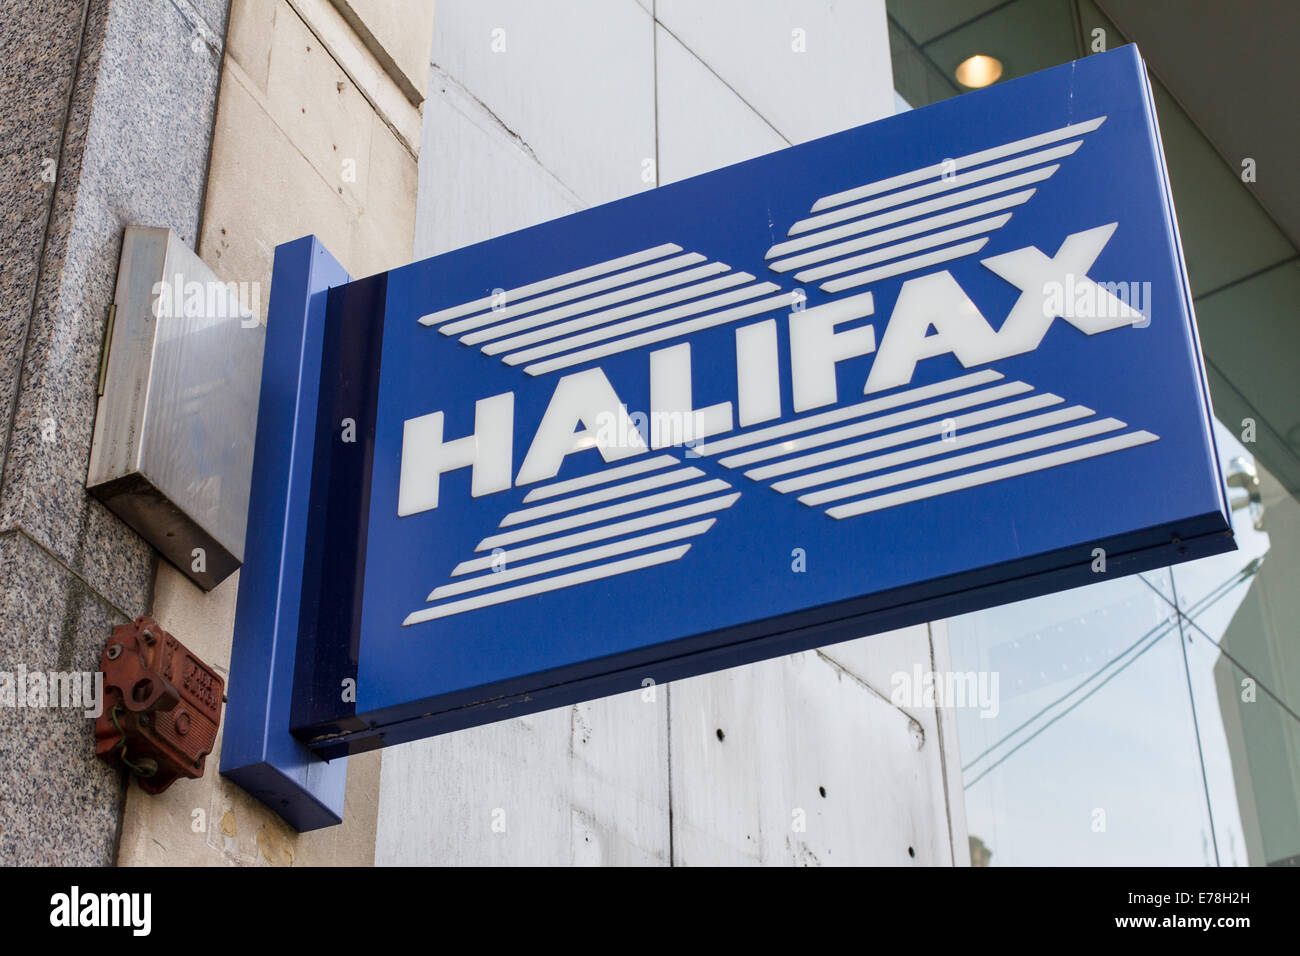 Halifax Building Society e Bank Street sign in Sheffield UK Foto Stock